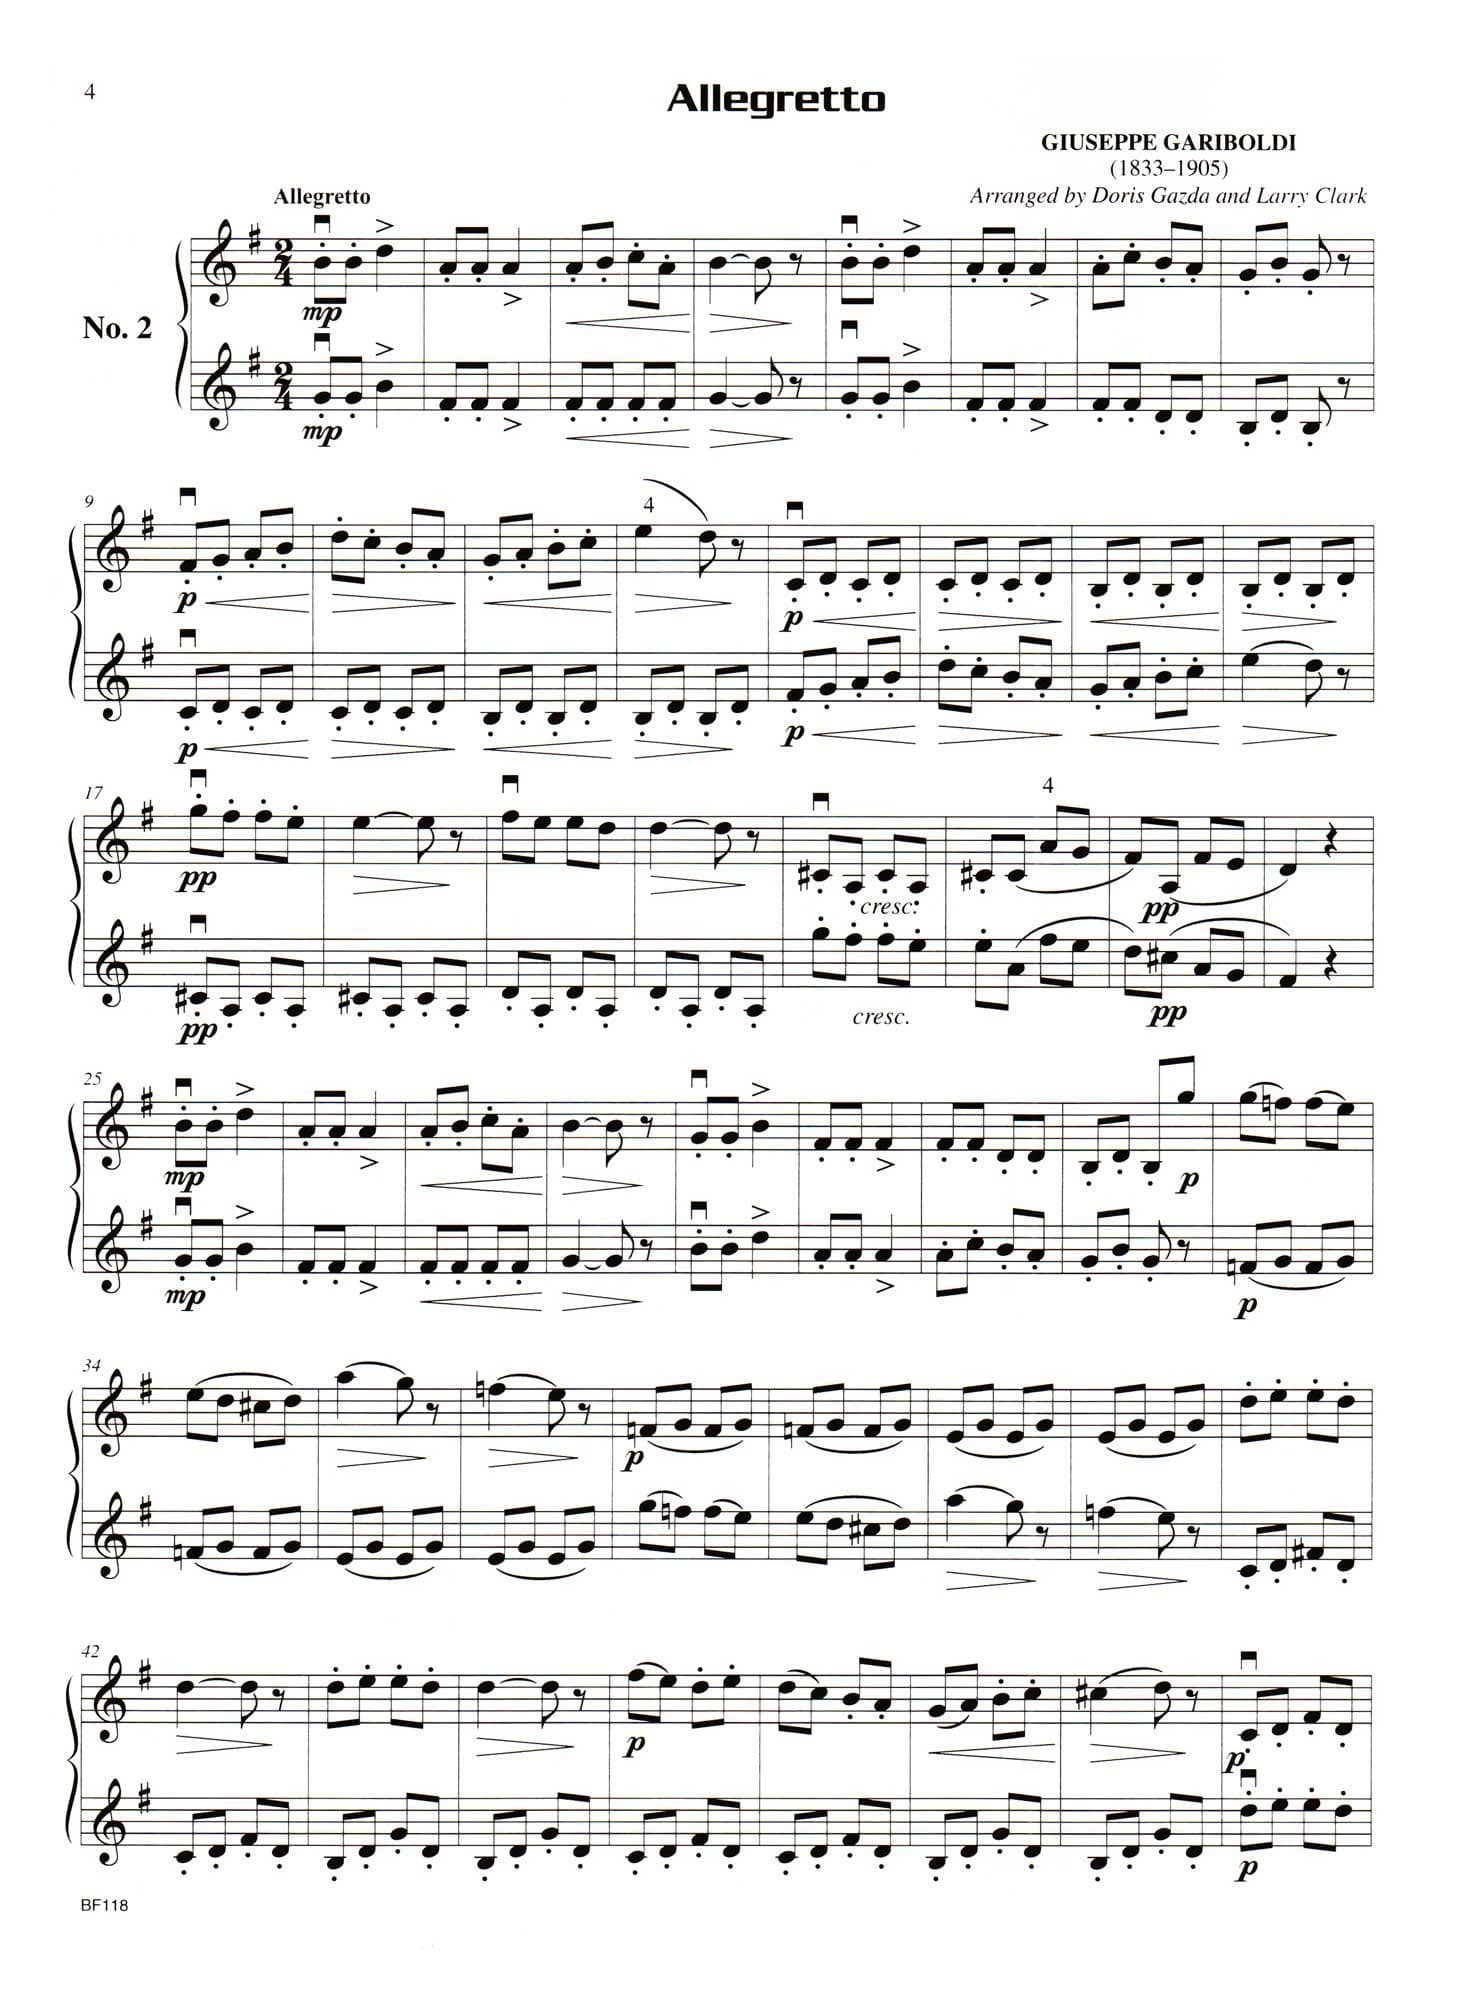 Gazda / Clark - Compatible Duets for Strings Volume II - Violin - Carl Fischer